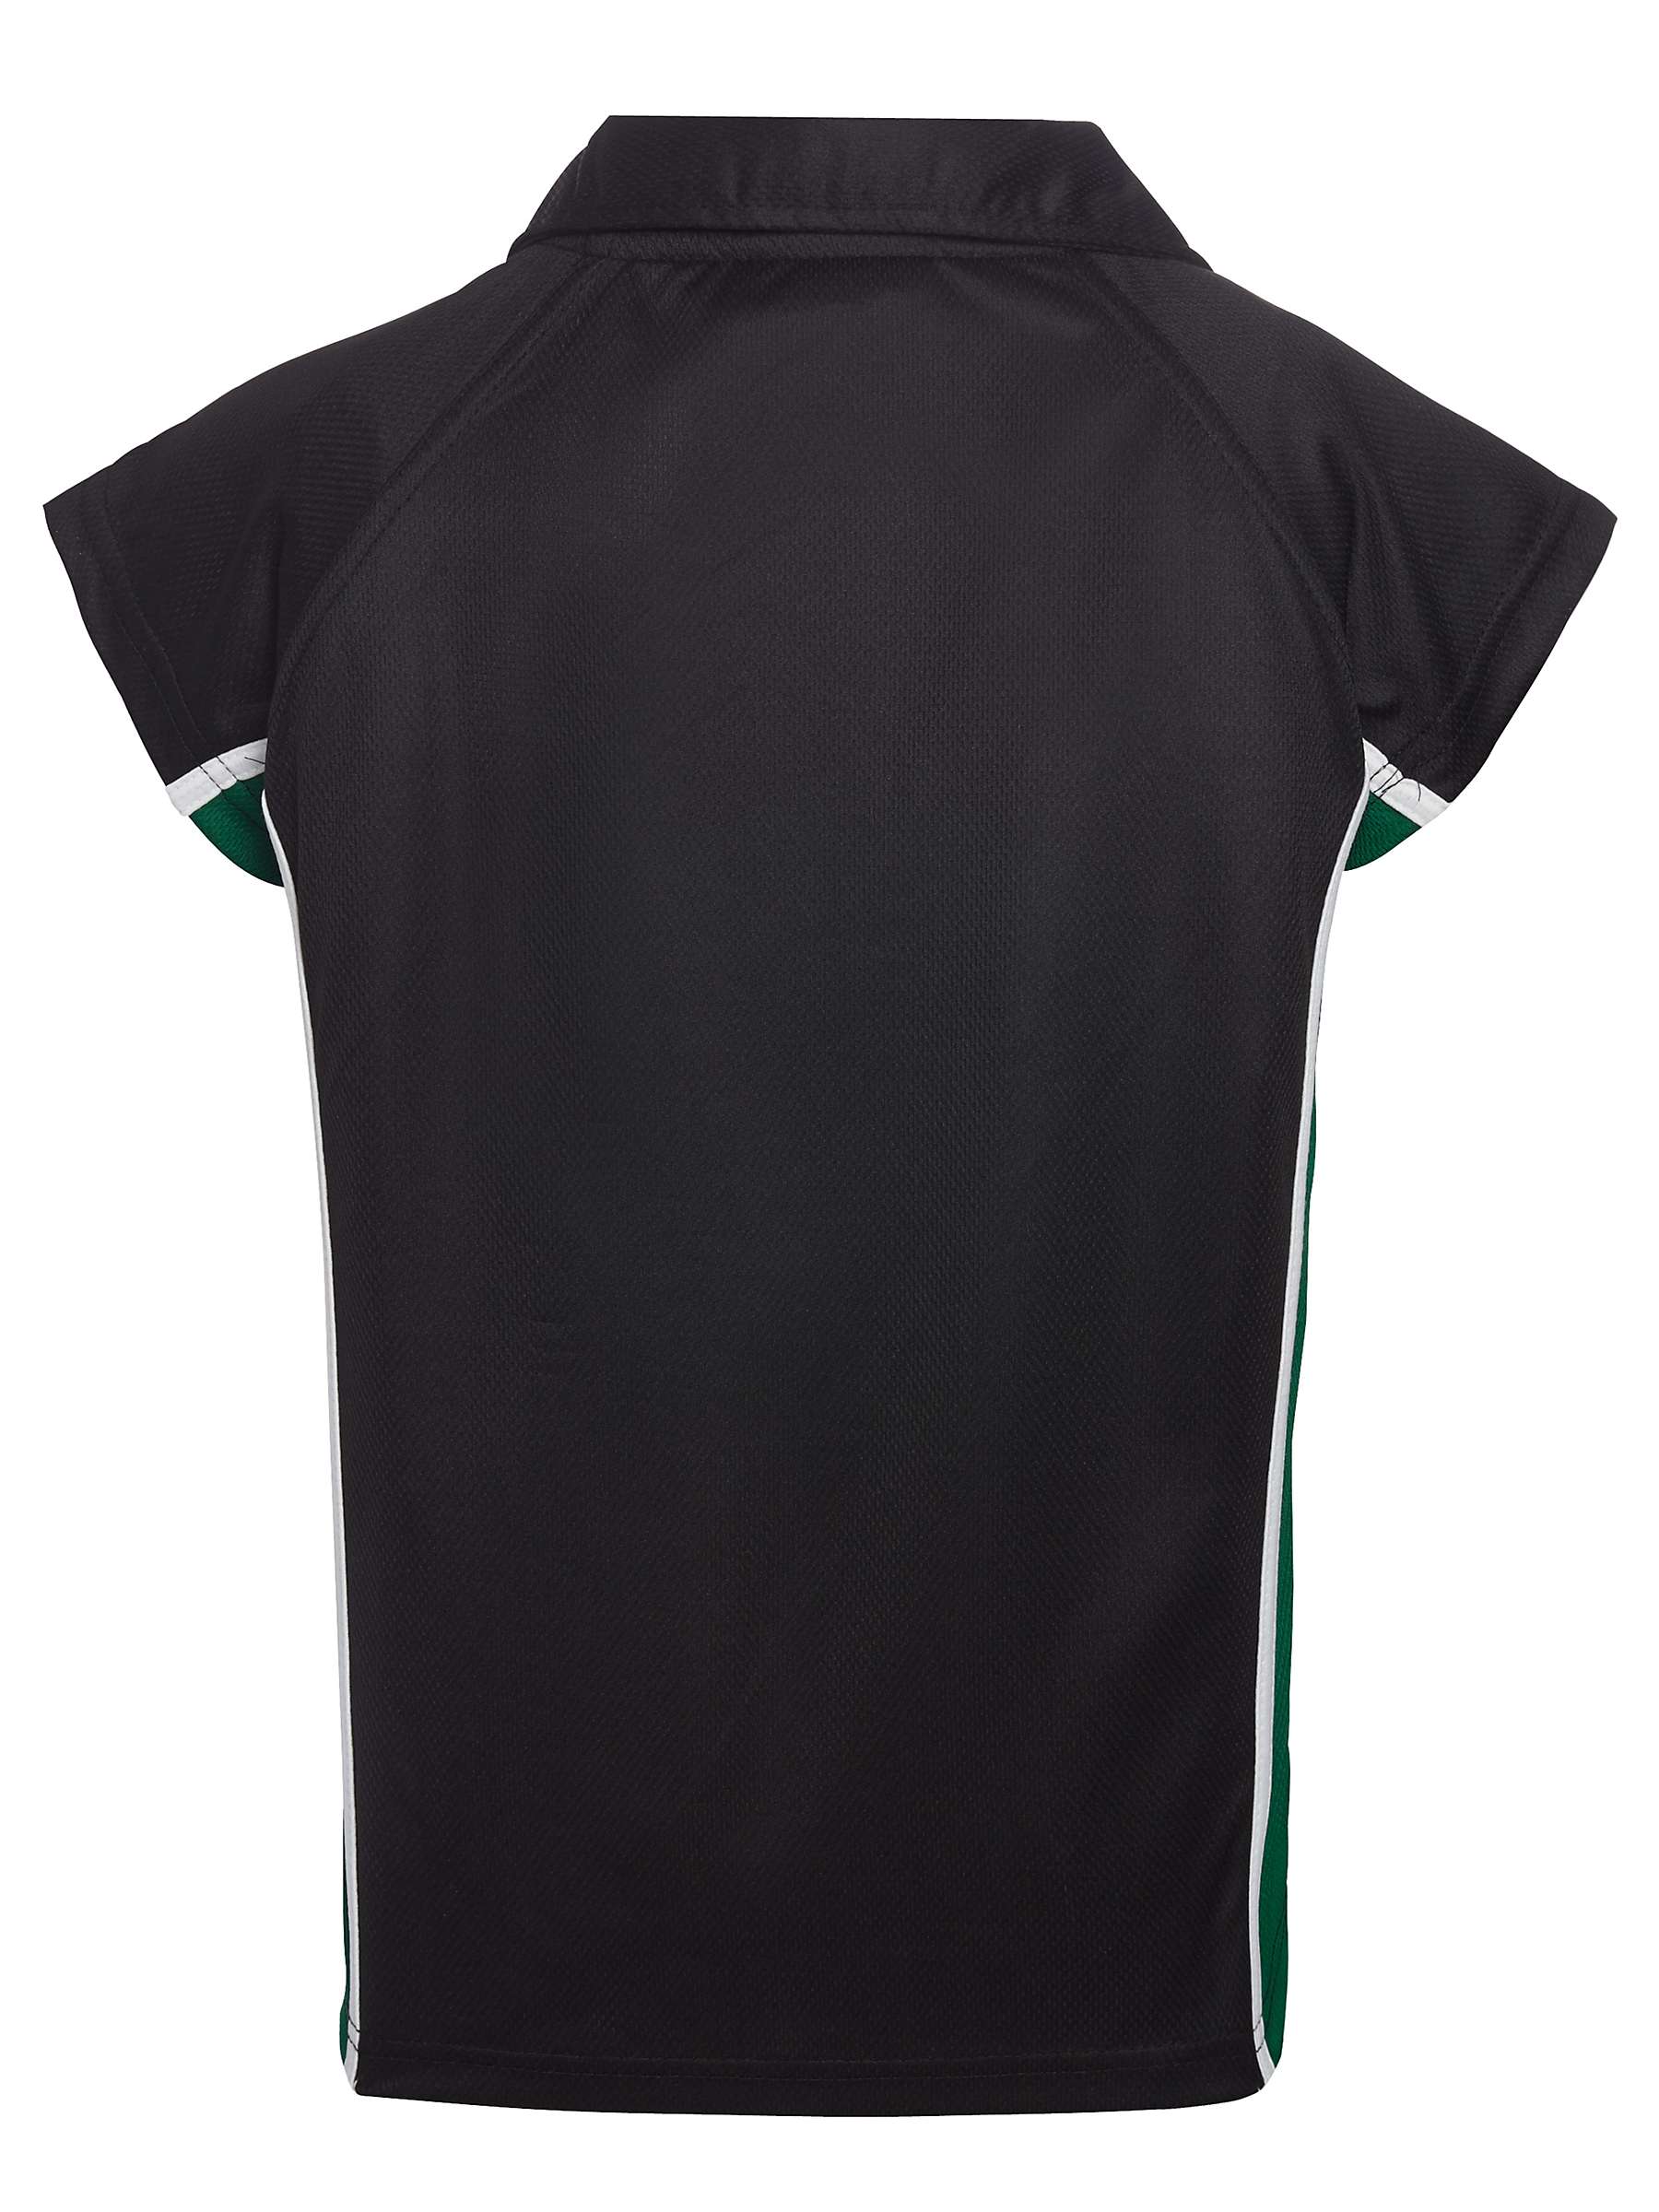 Buy Bellerive FCJ Catholic College Girls' Polo Shirt, Black/Green Online at johnlewis.com